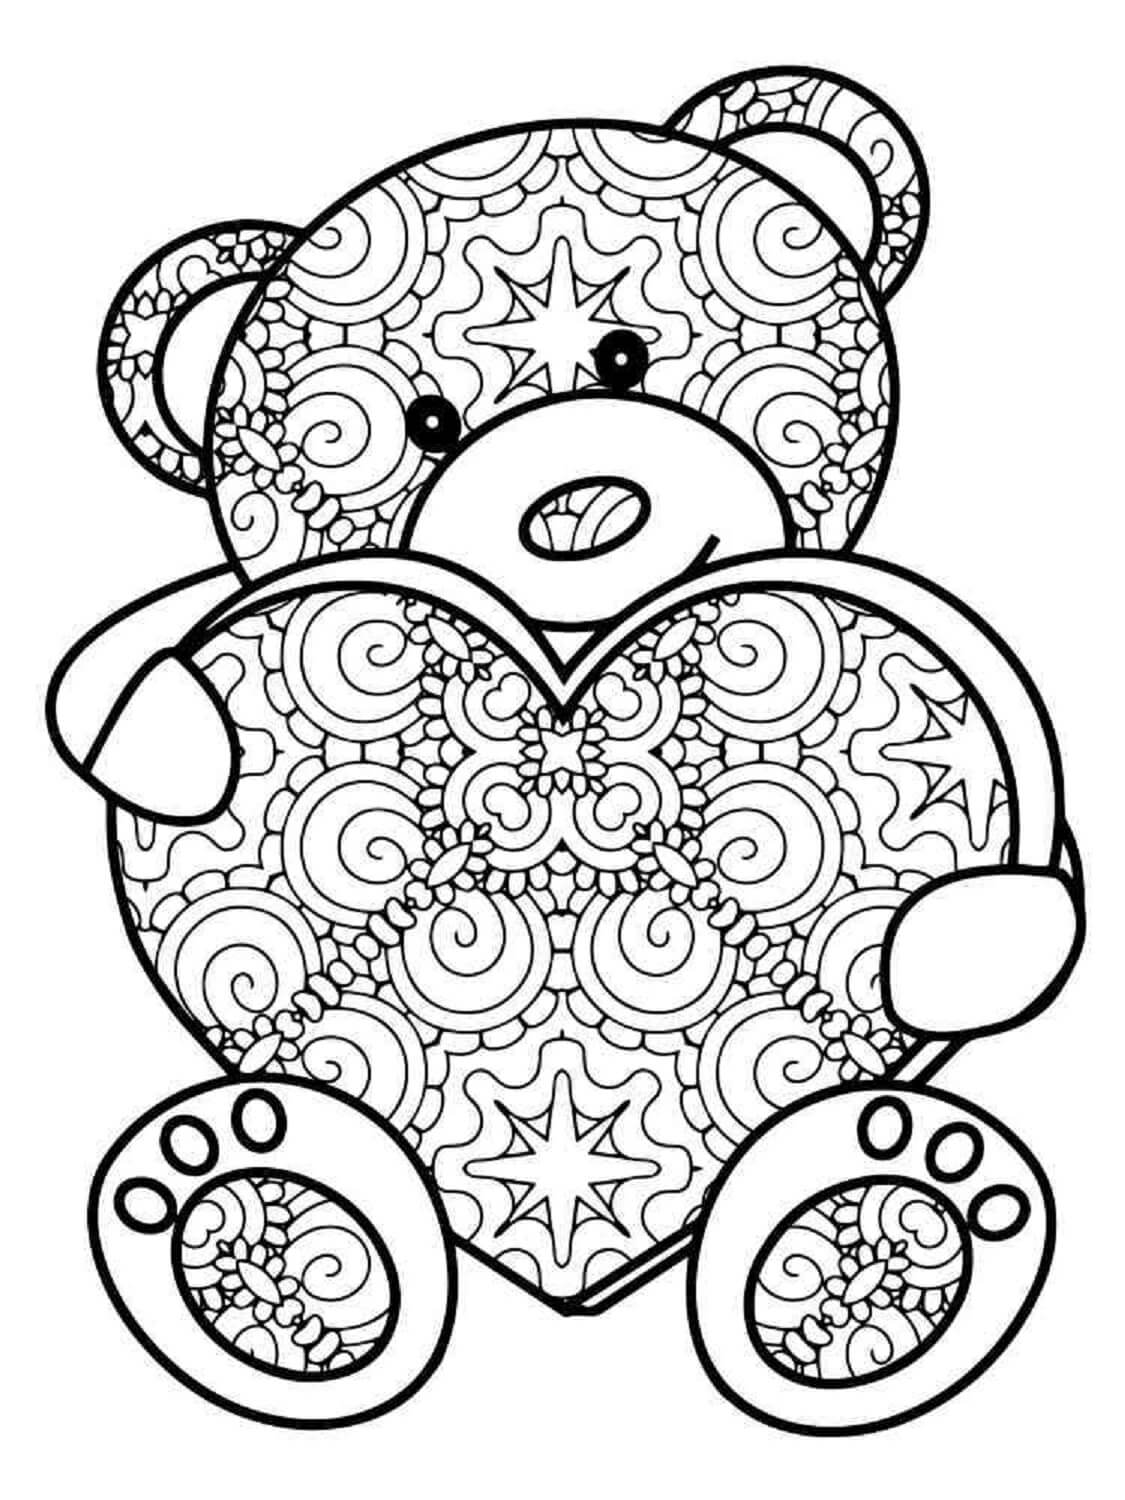 Teddy bear holding heart mandala coloring page